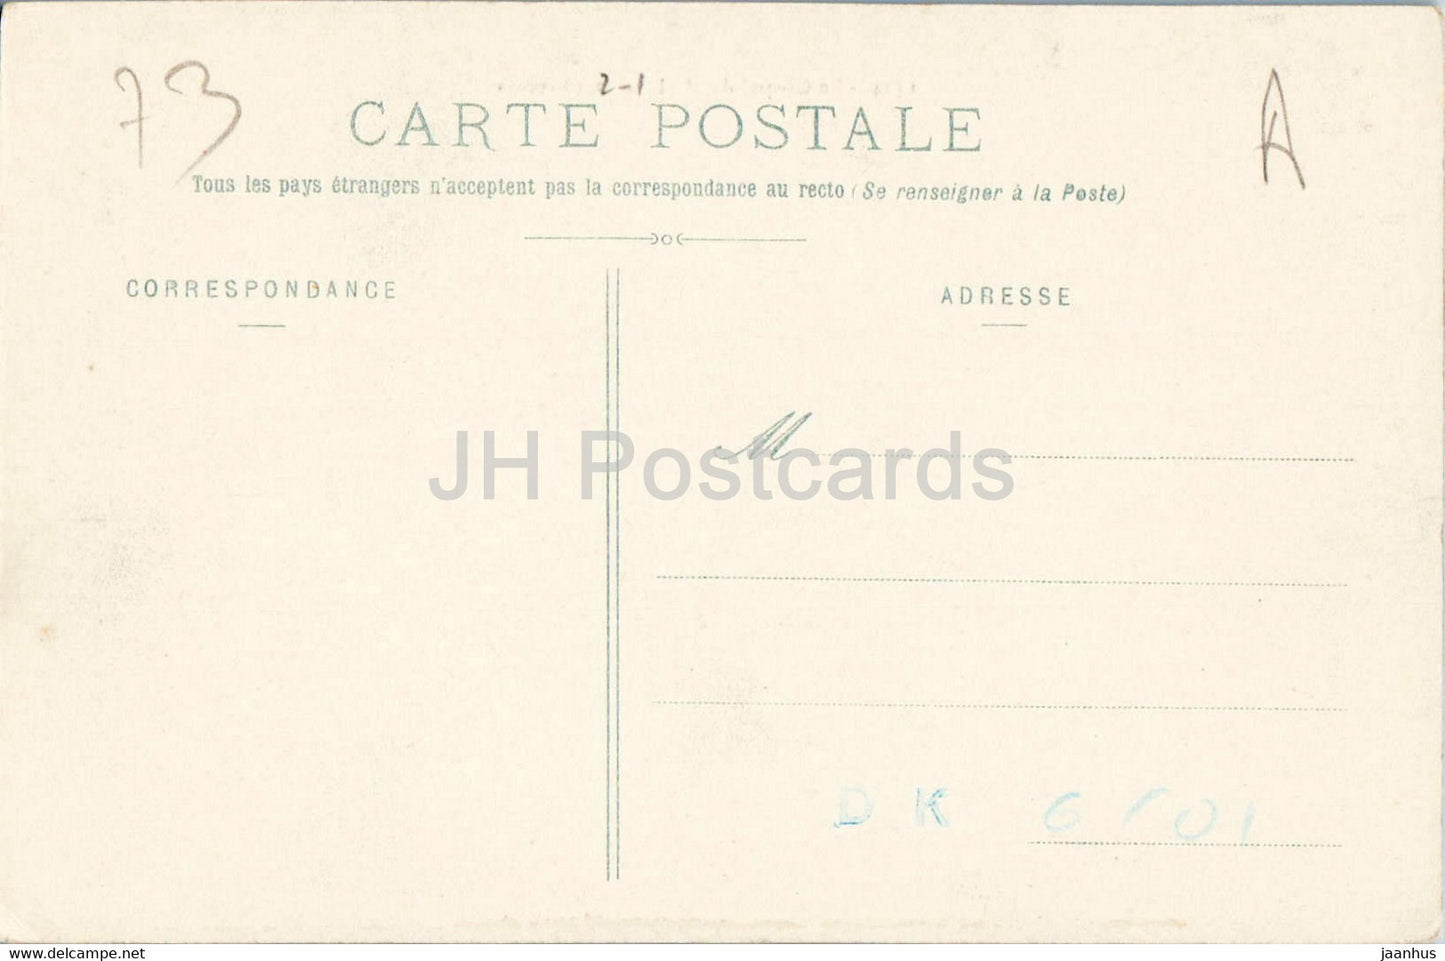 Le Cirque de Pralognan - 1424 - mountains - old postcard - France - unused